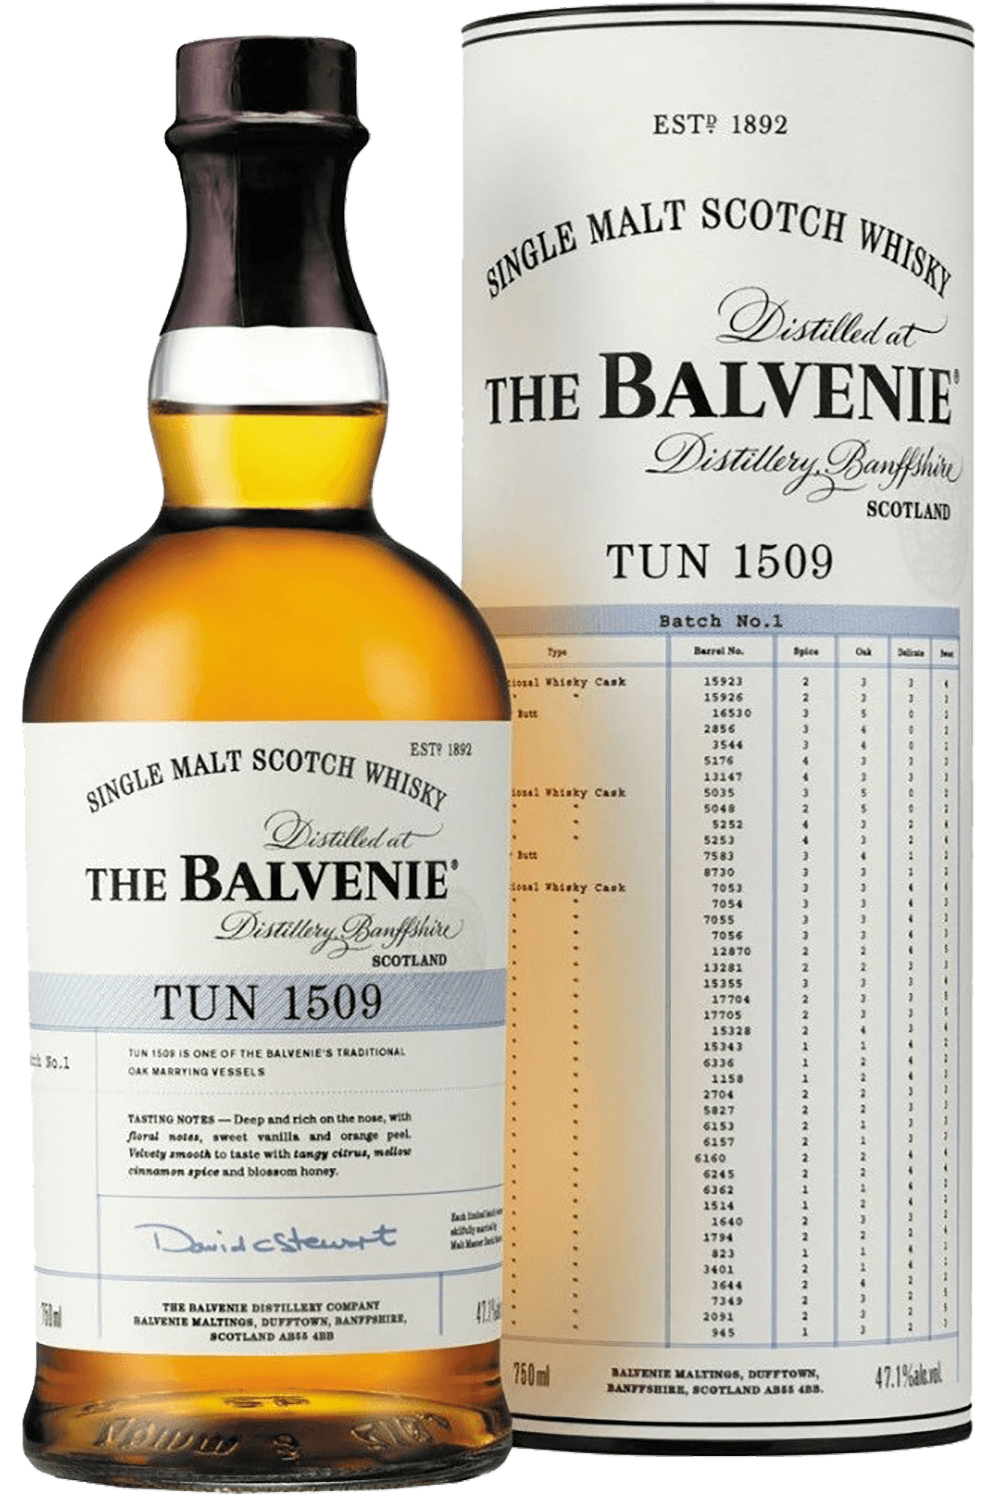 The Balvenie Tun 1509 Single Malt Scotch Whisky (gift box)